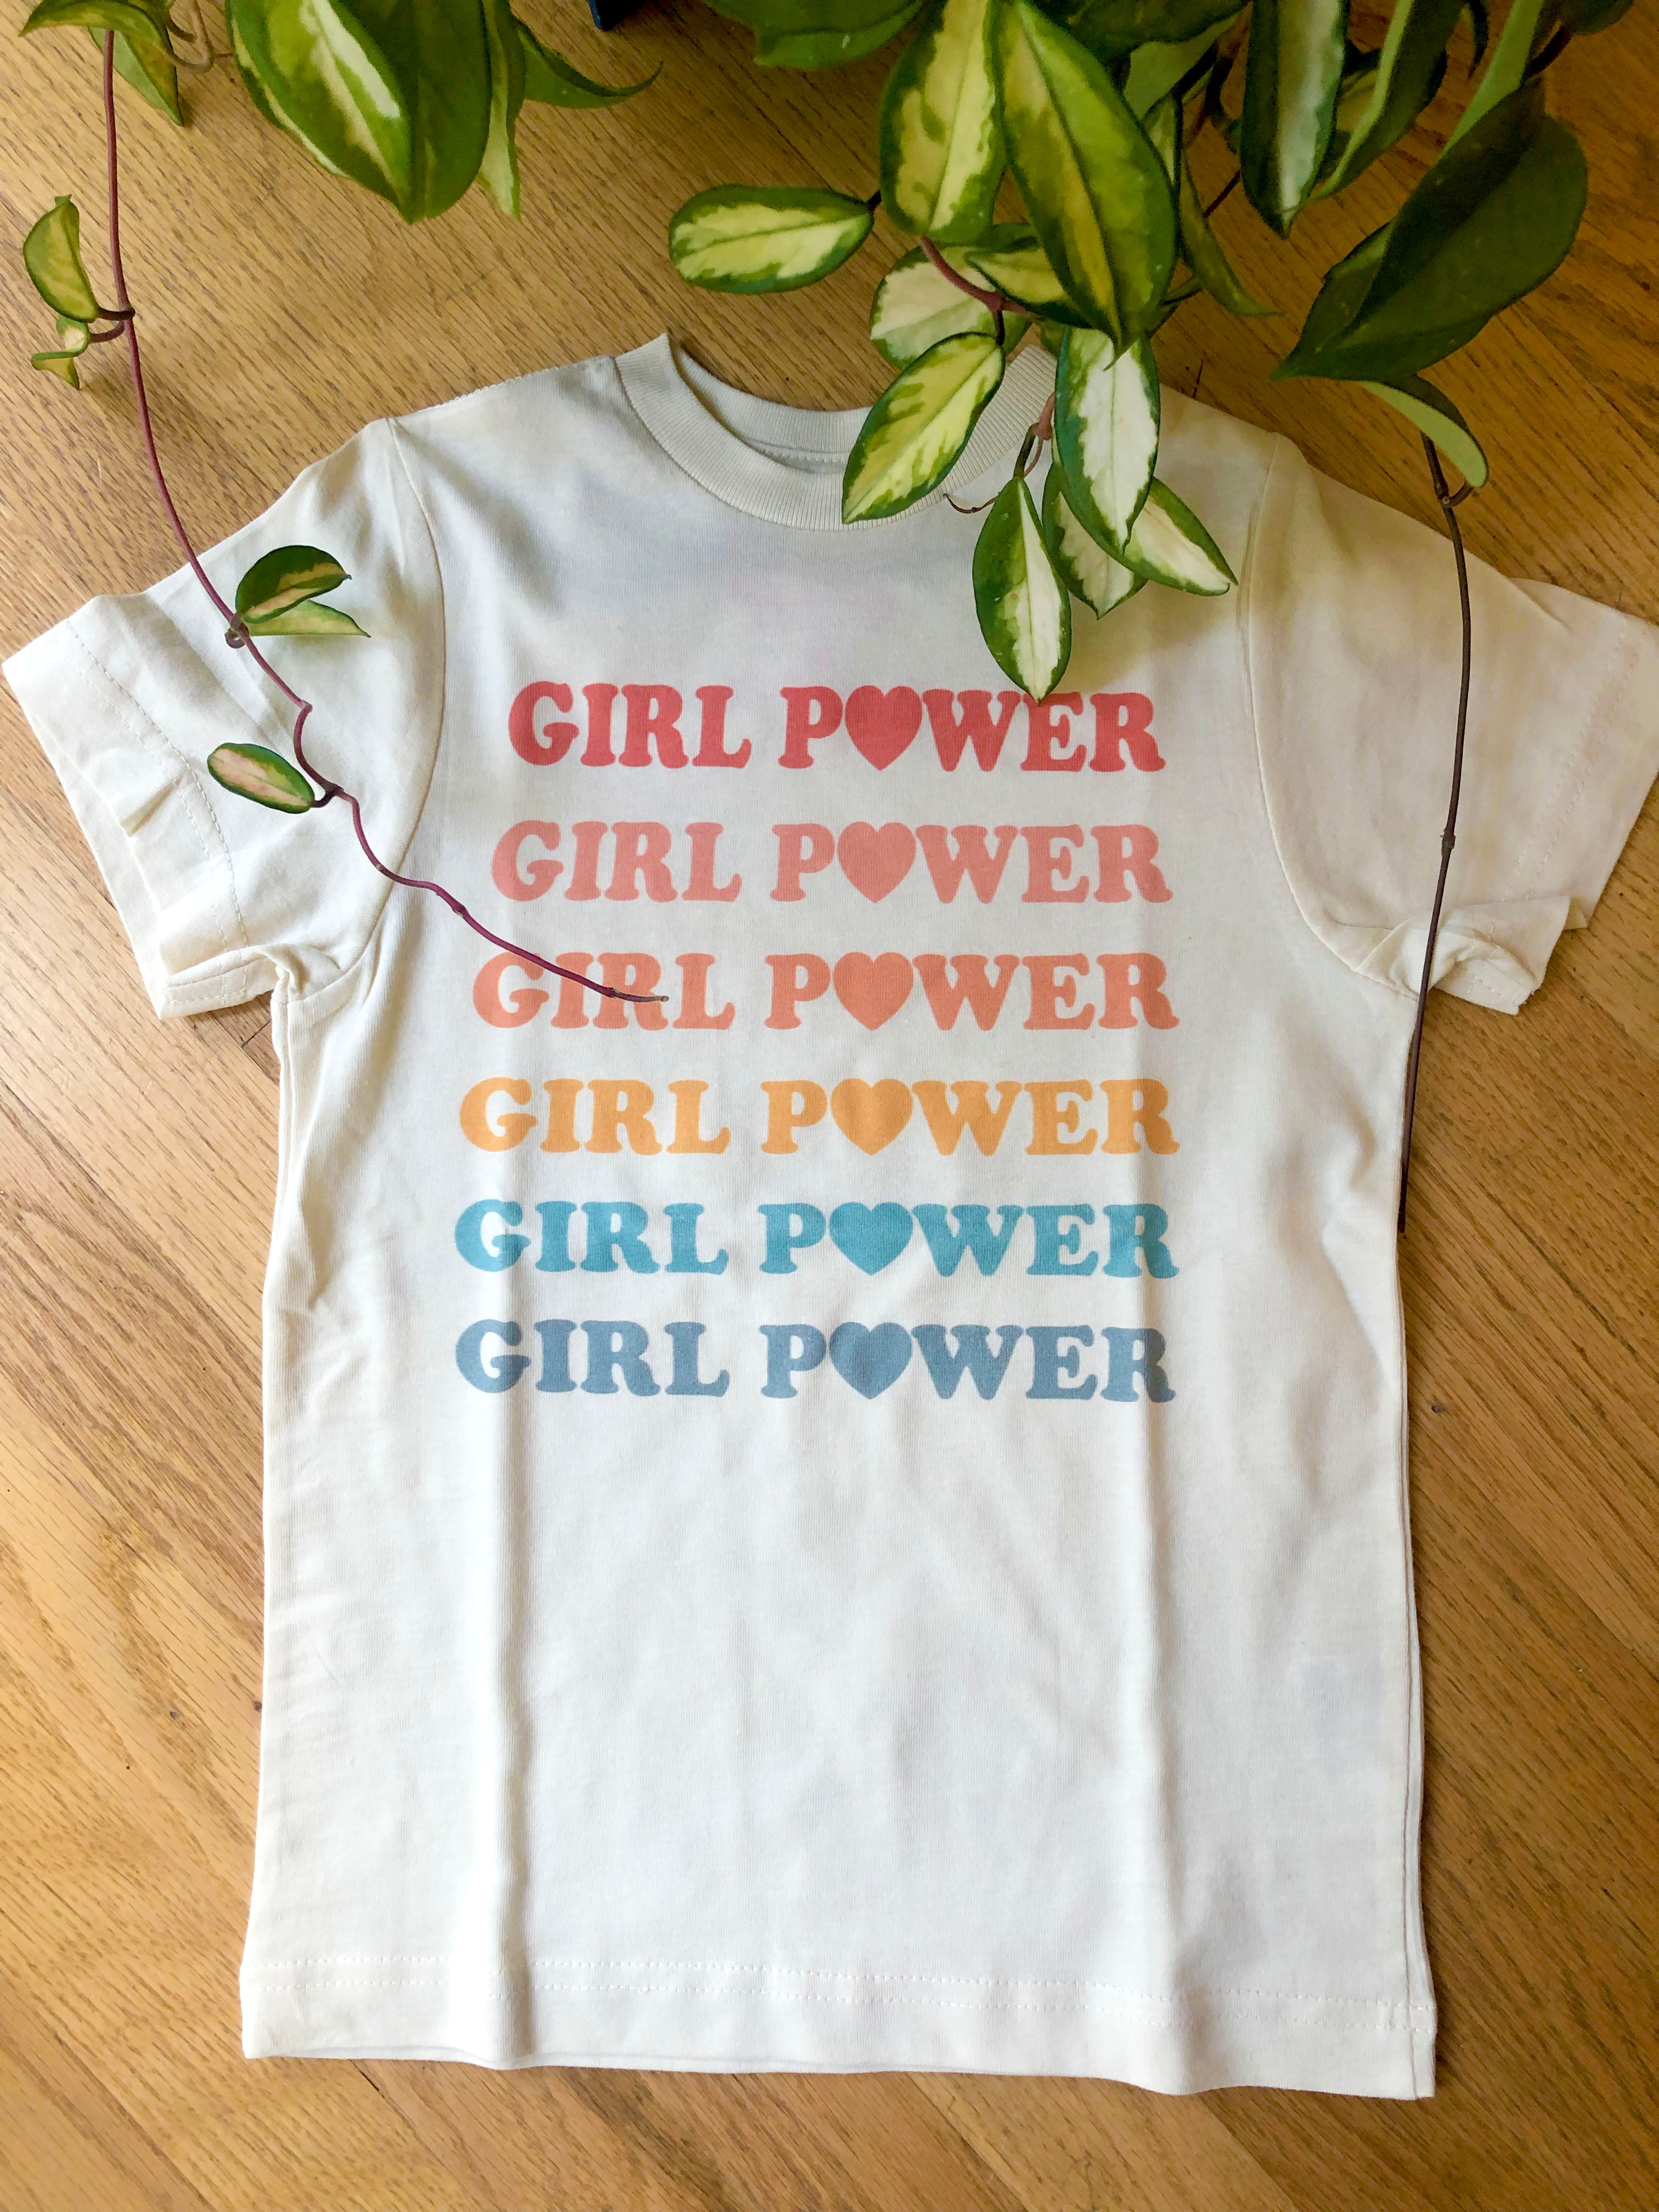 Pastel Rainbow Girl Power Kid's T-Shirt